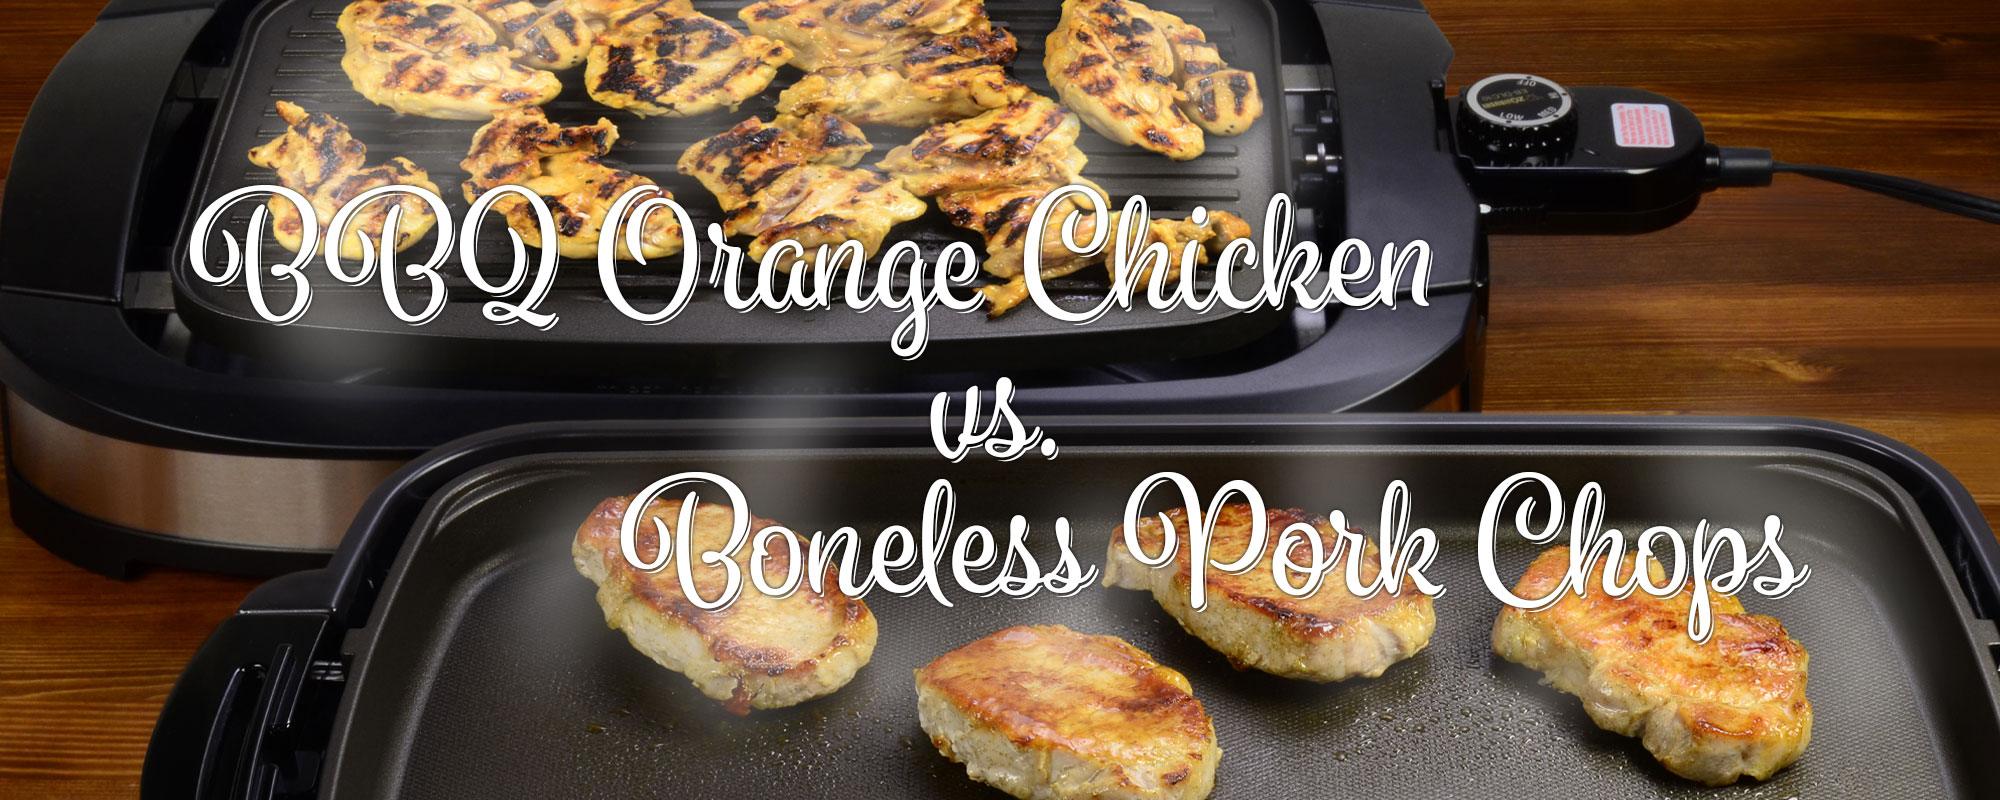 BBQ Orange Chicken vs. Boneless Pork Chops